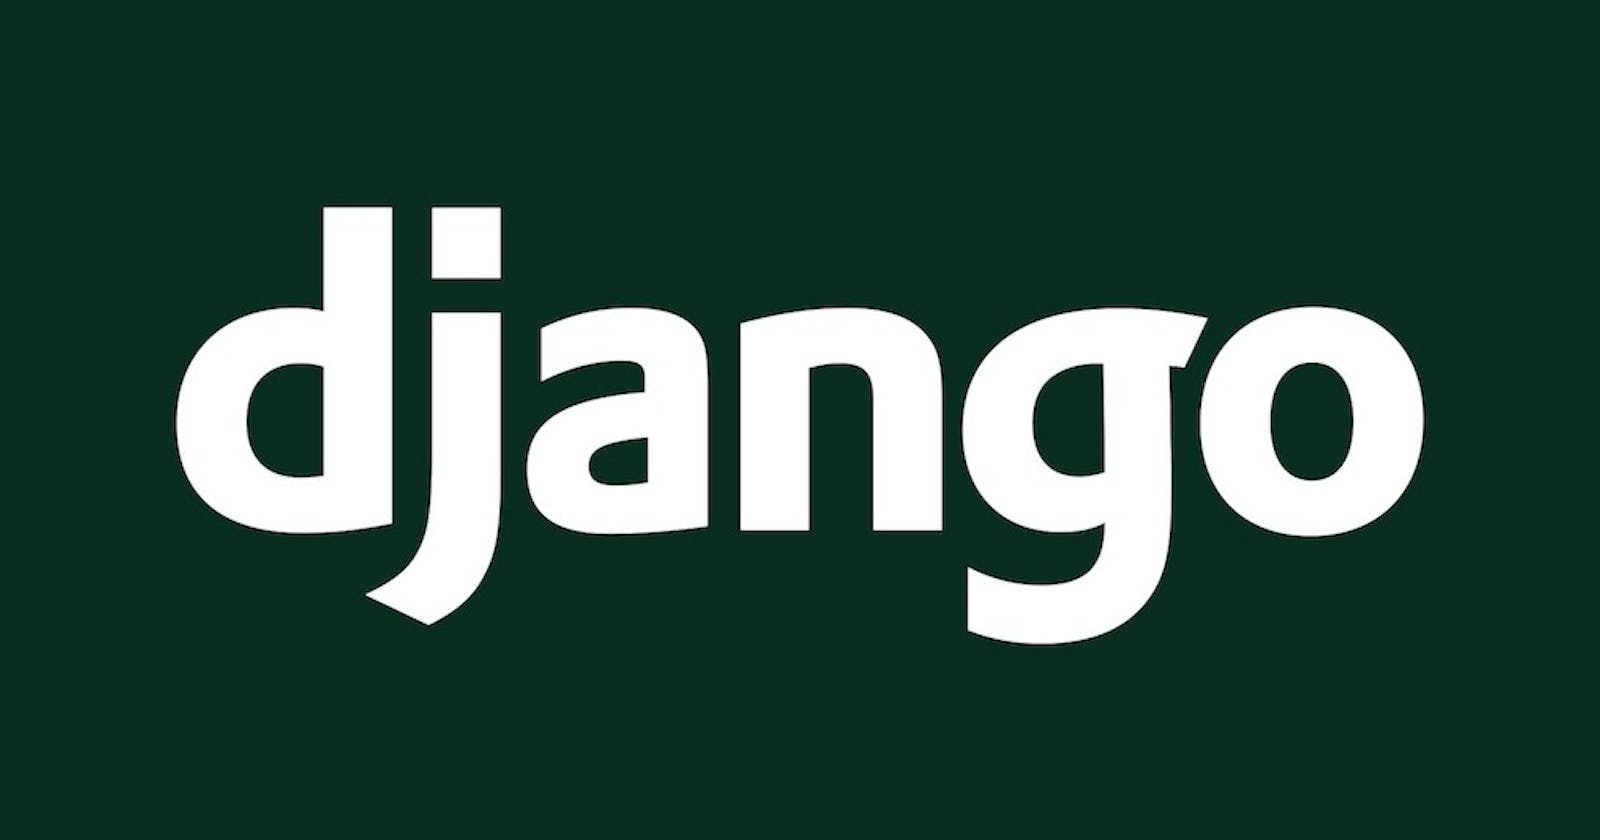 Configuring and setting up subdomains on Django using django-hosts